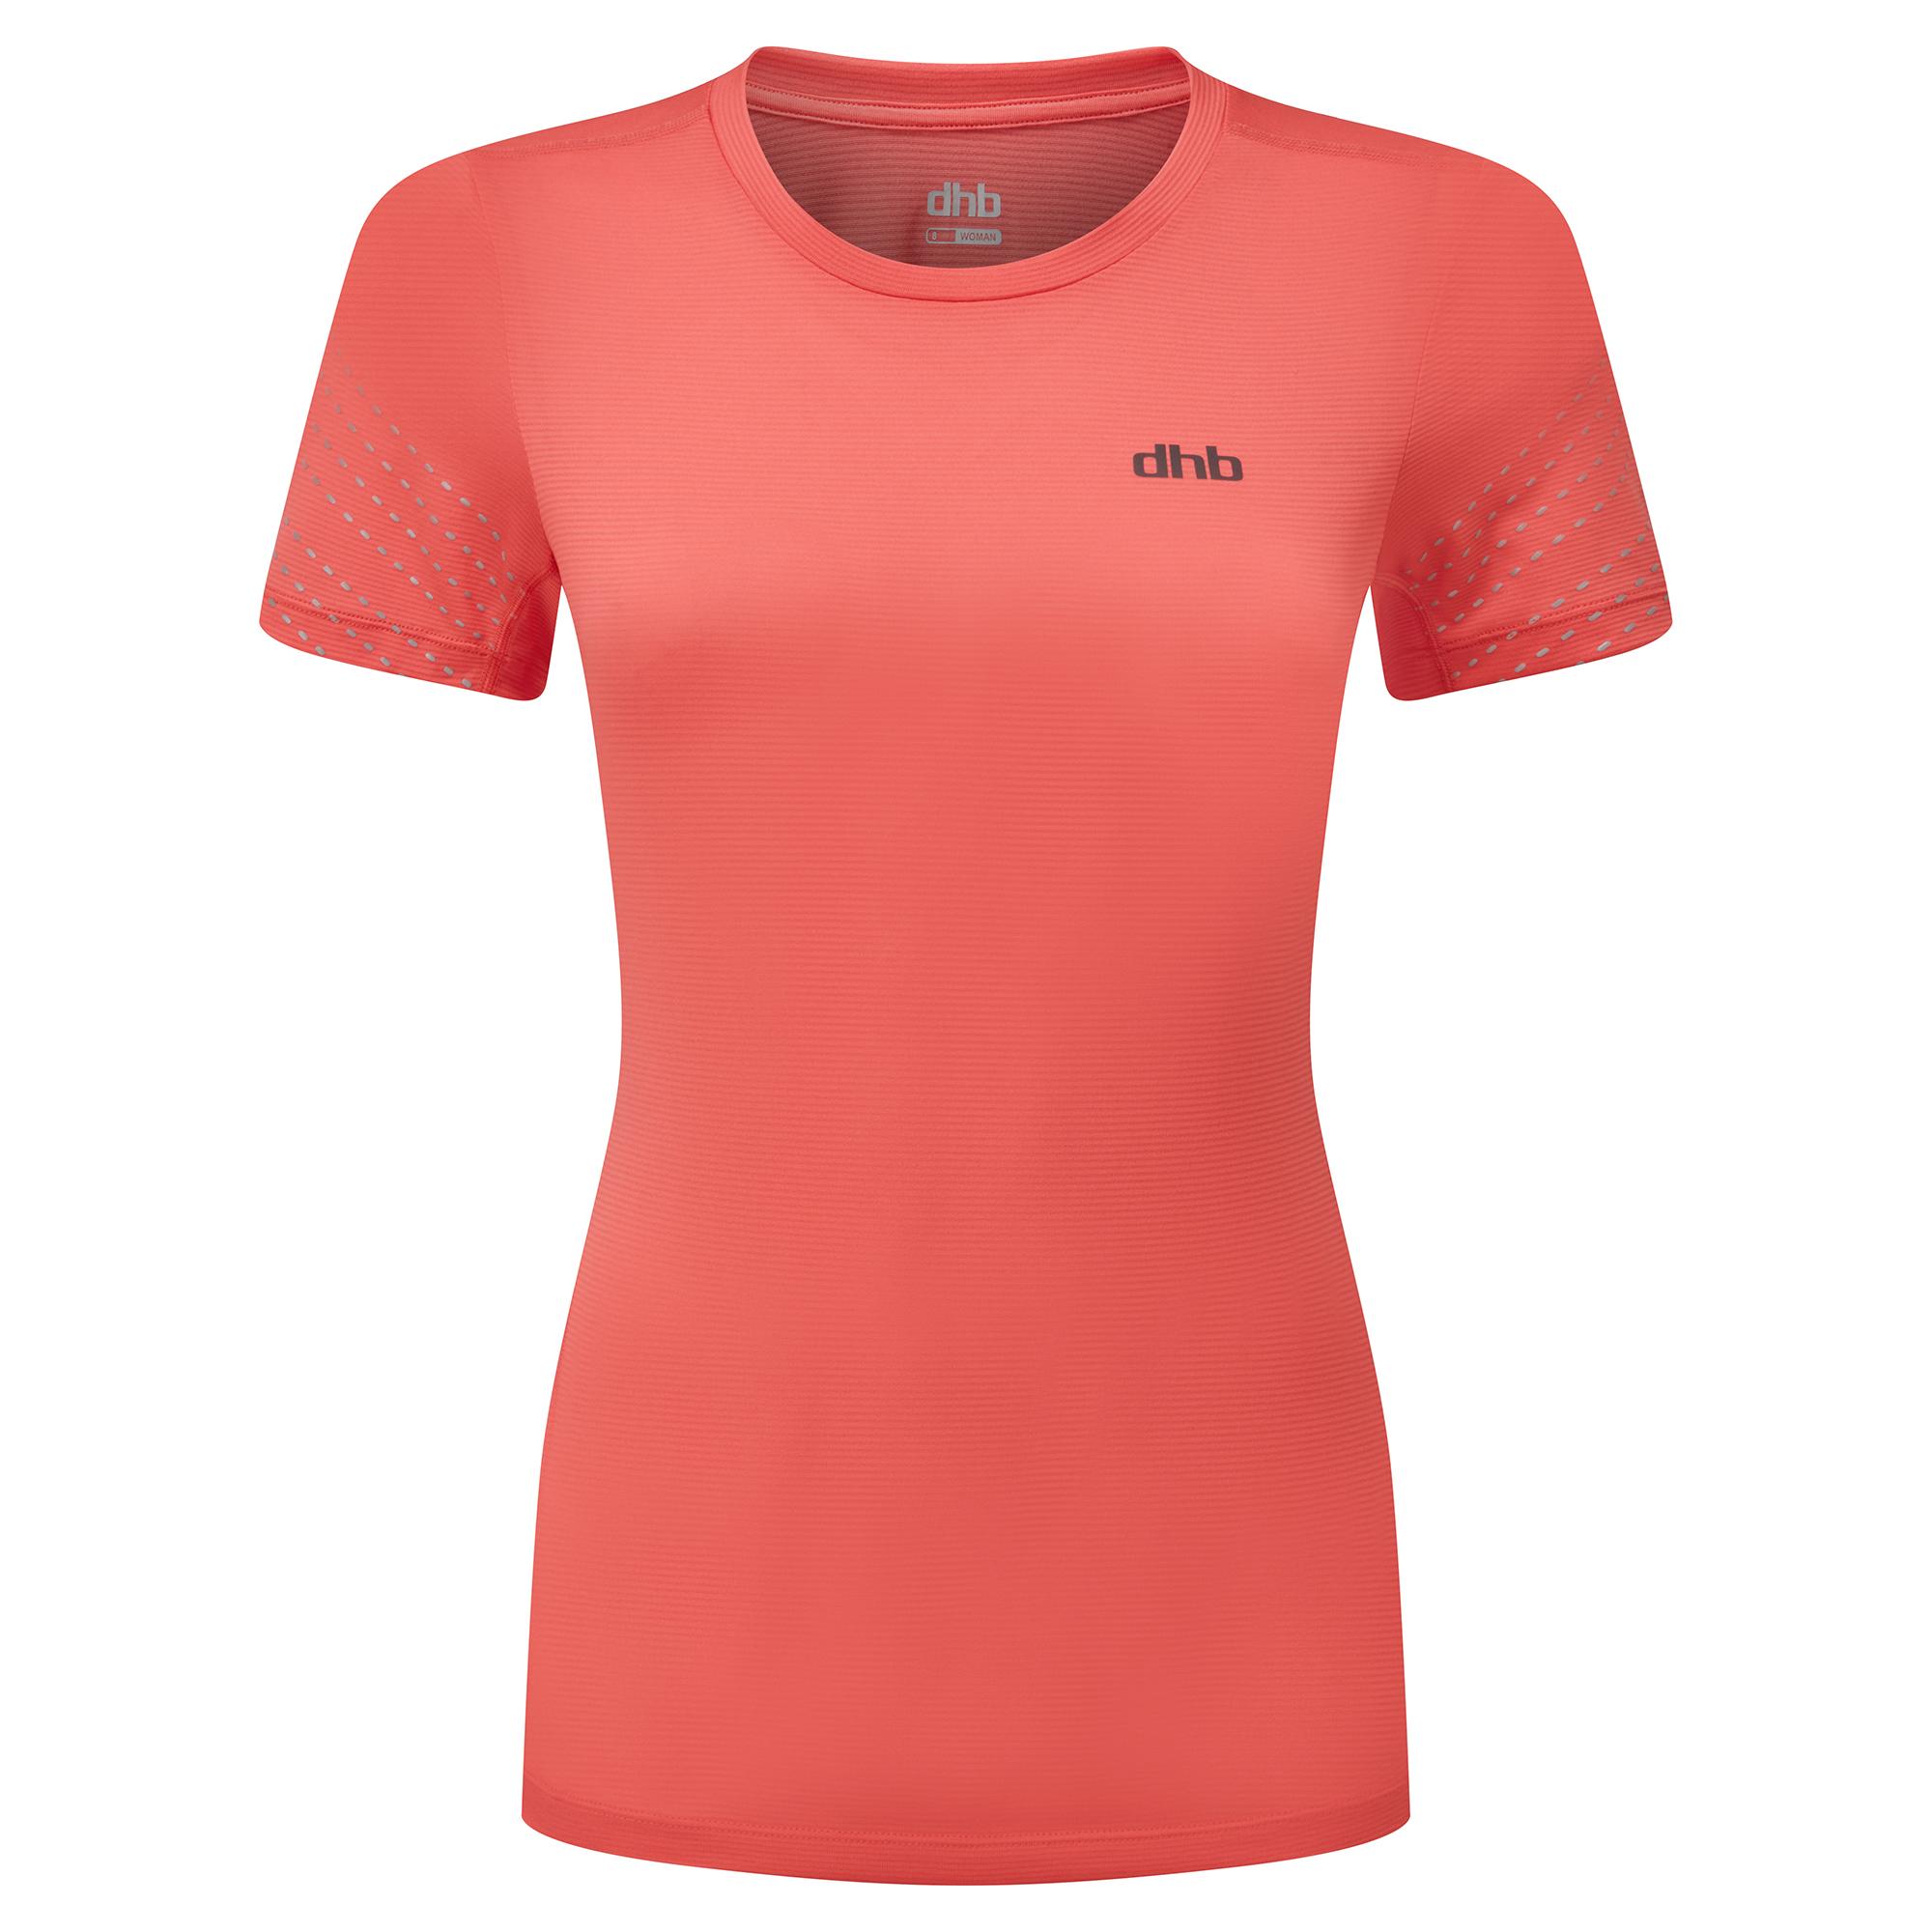 Dhb Aeron Flt Womens  Short Sleeve Run Top - Pink